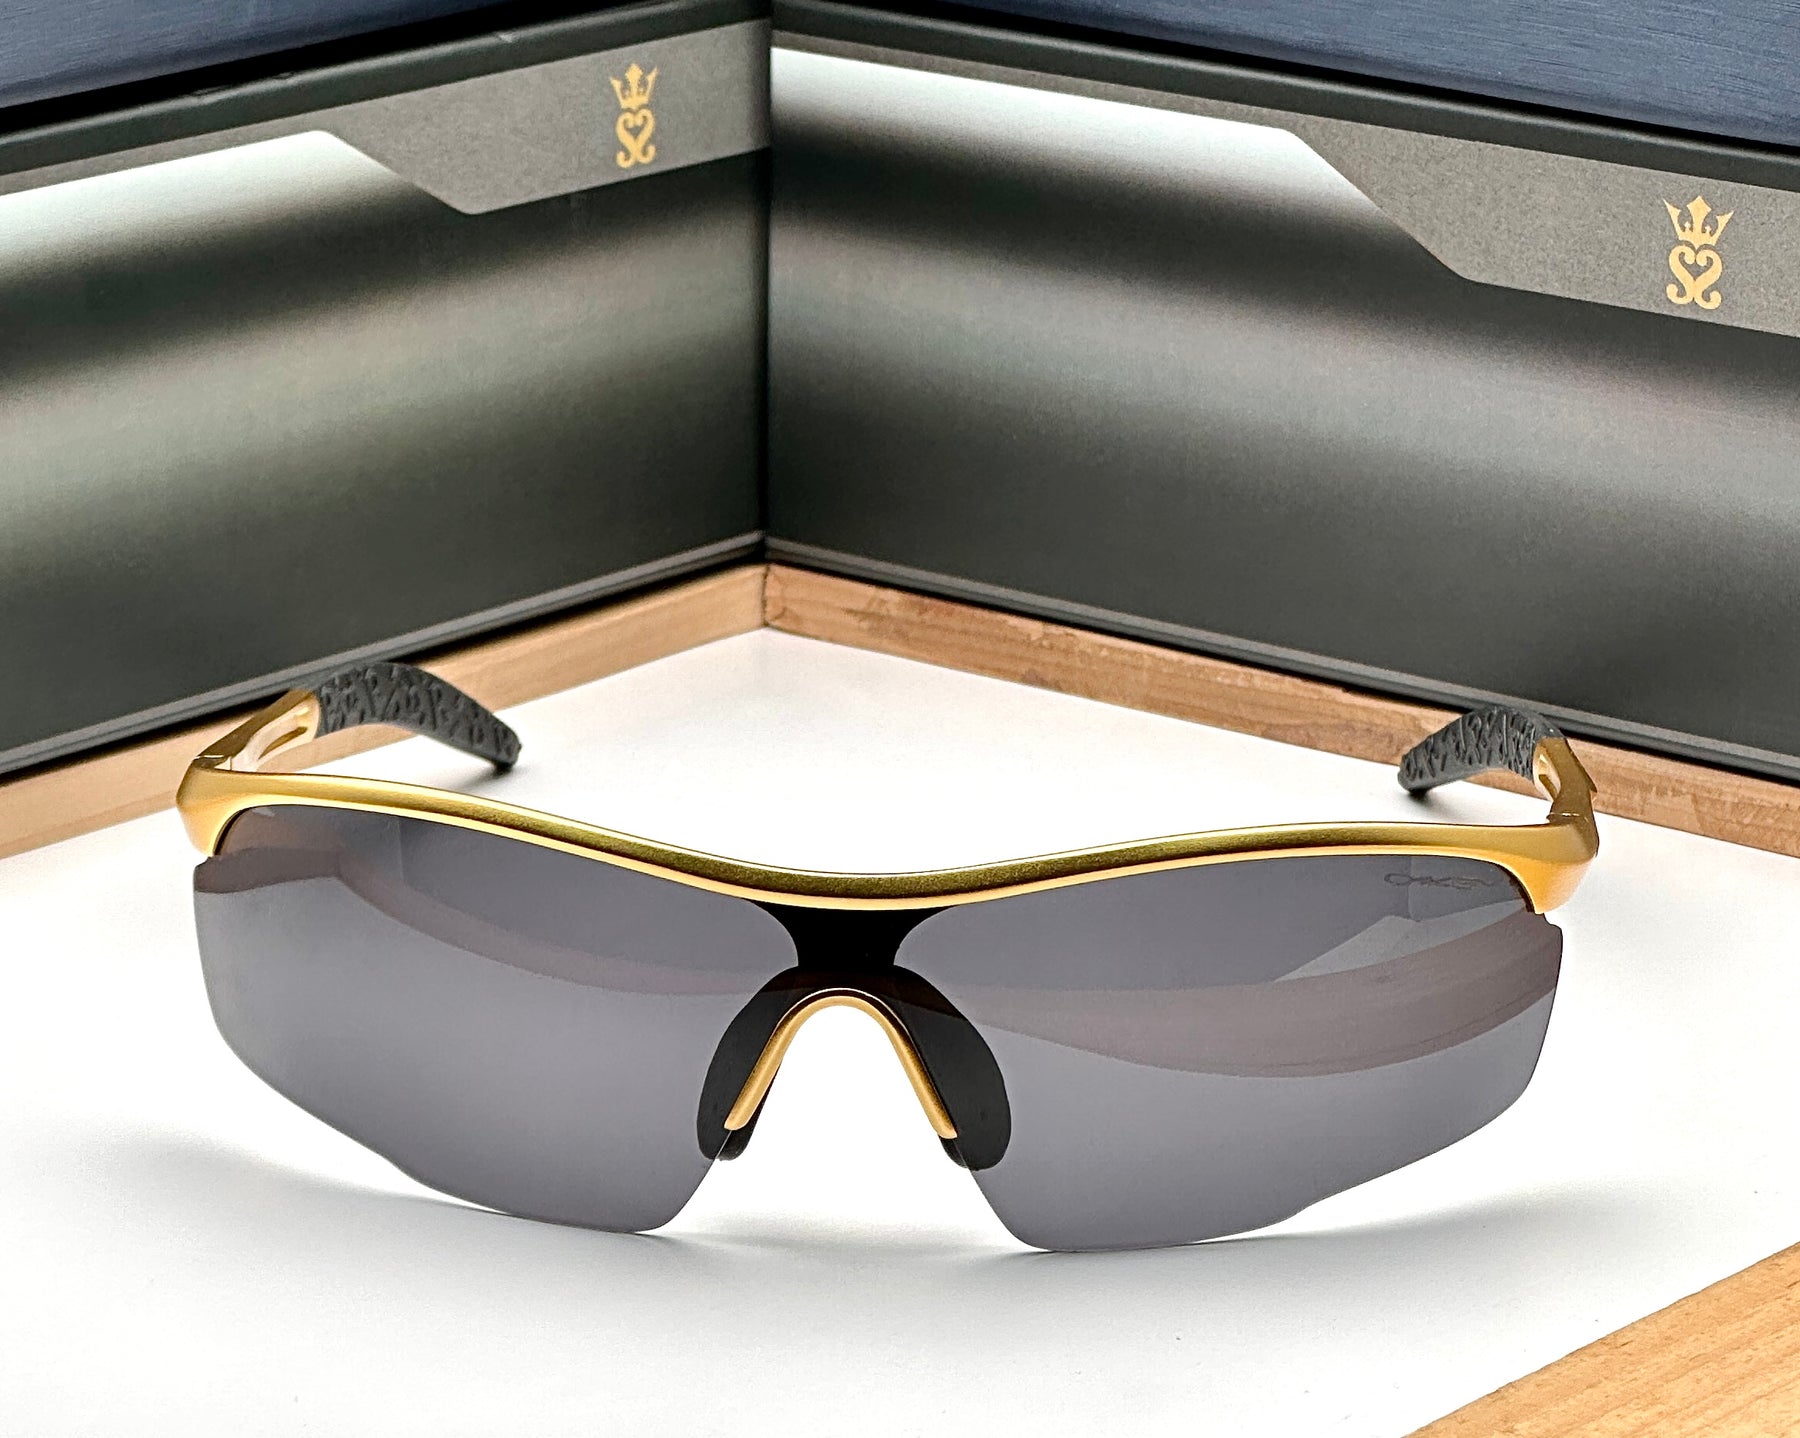 Cazal 8044 001 Gold Plated Sunglasses - US